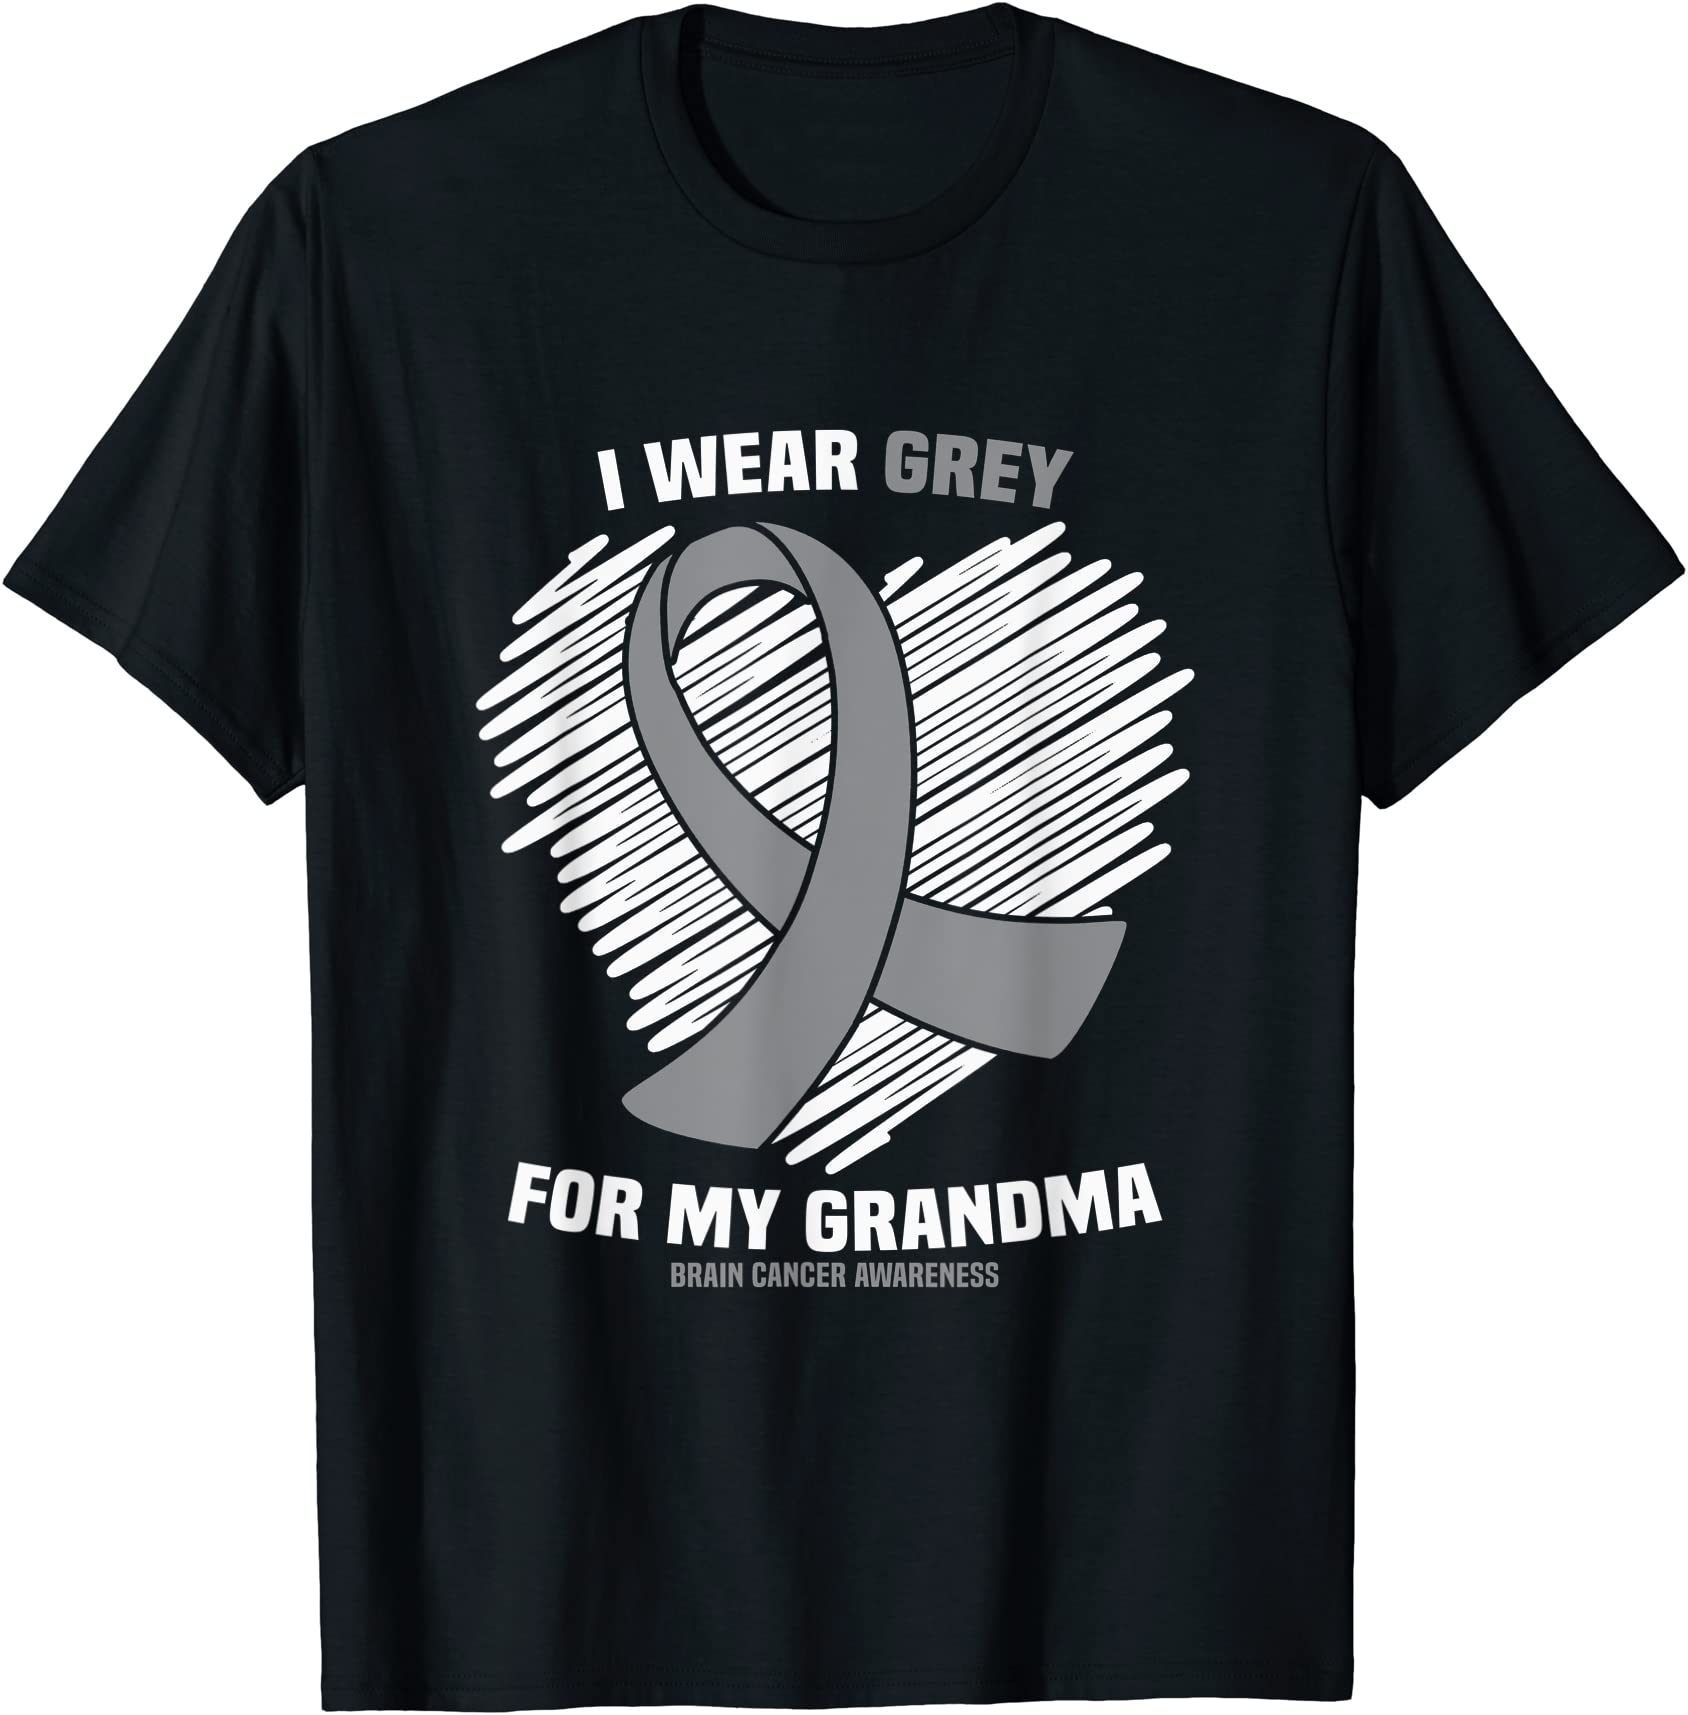 i wear grey for my grandma brain cancer awareness t shirt men - Buy t ...